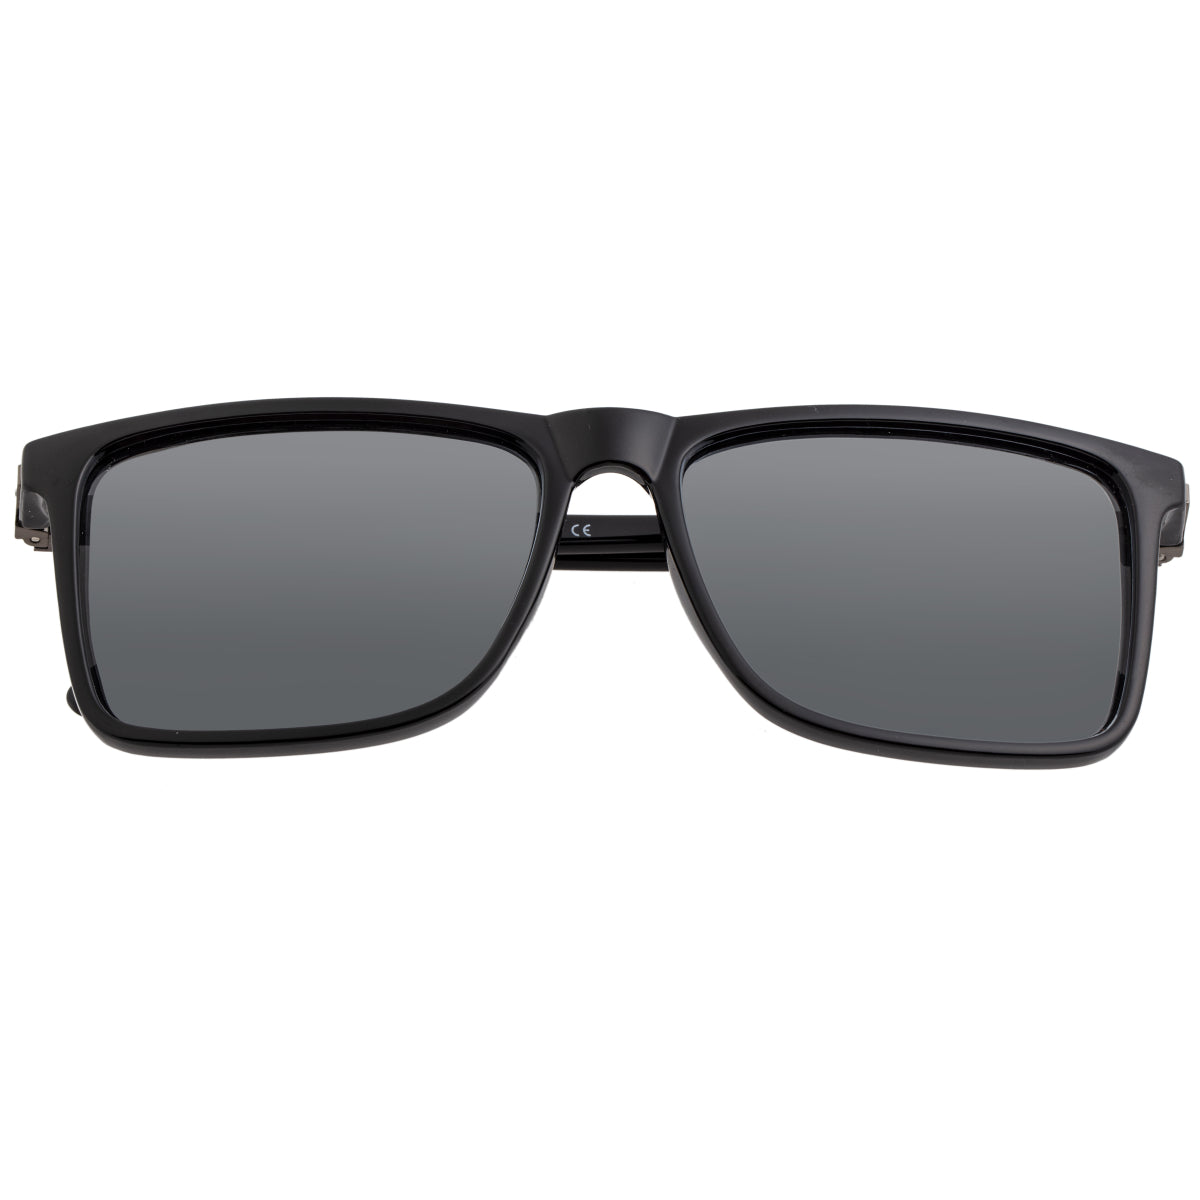 Breed Caelum Polarized Sunglasses - Black/Black - BSG063BK